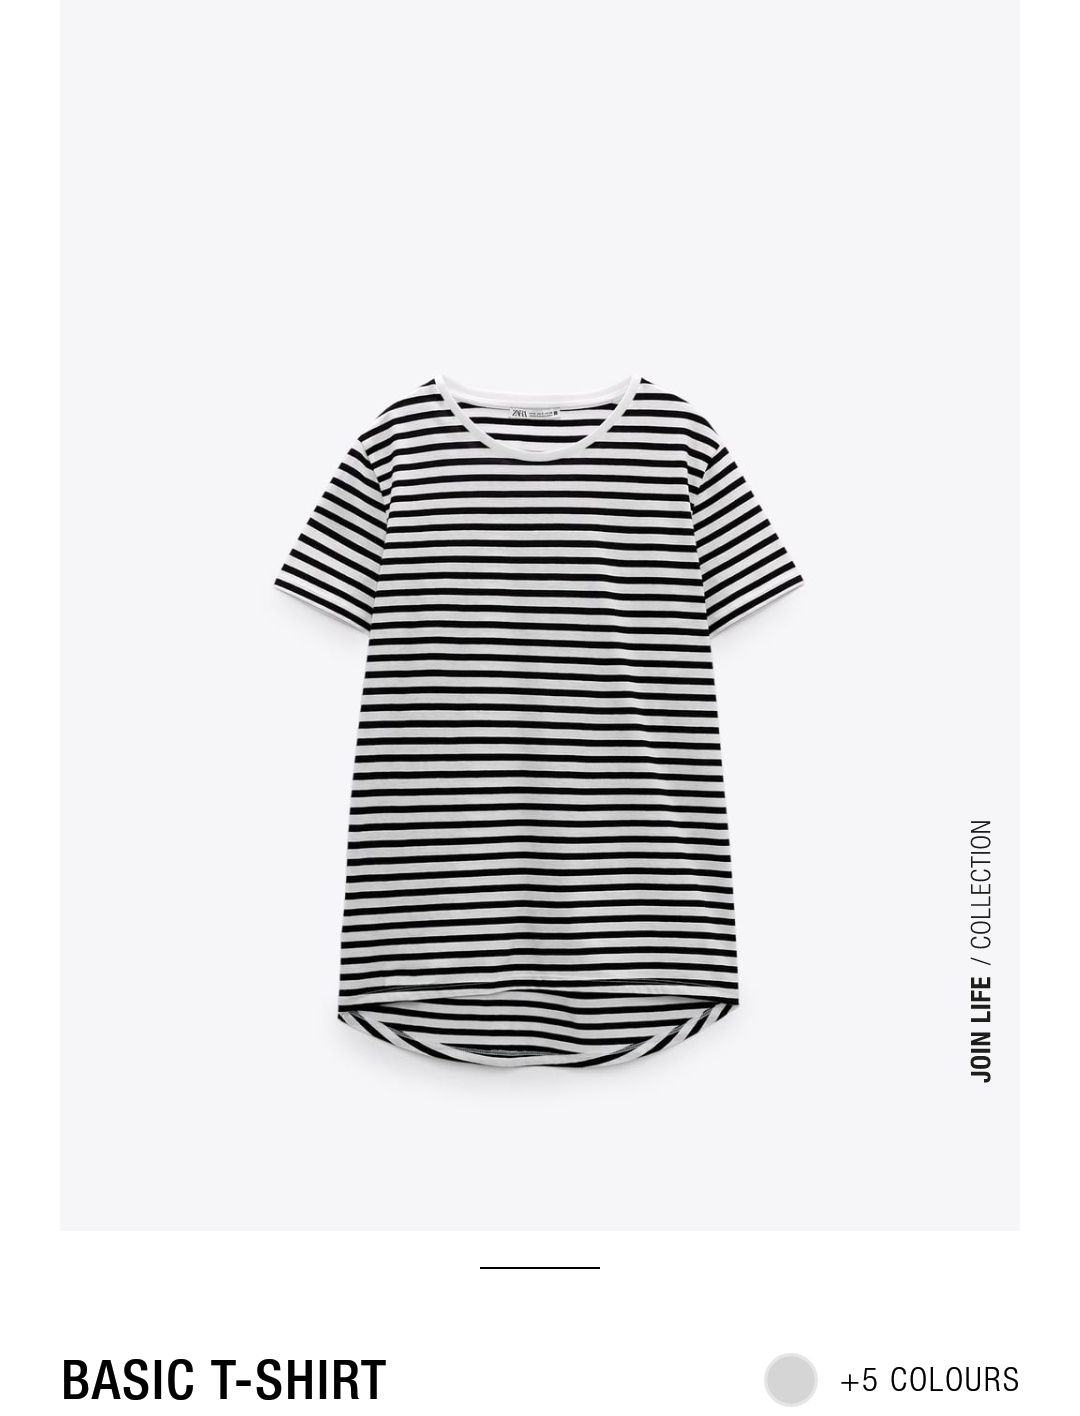 Продана. Скидка Новая базовая футболка от Zara, размер xl, оригинал Za